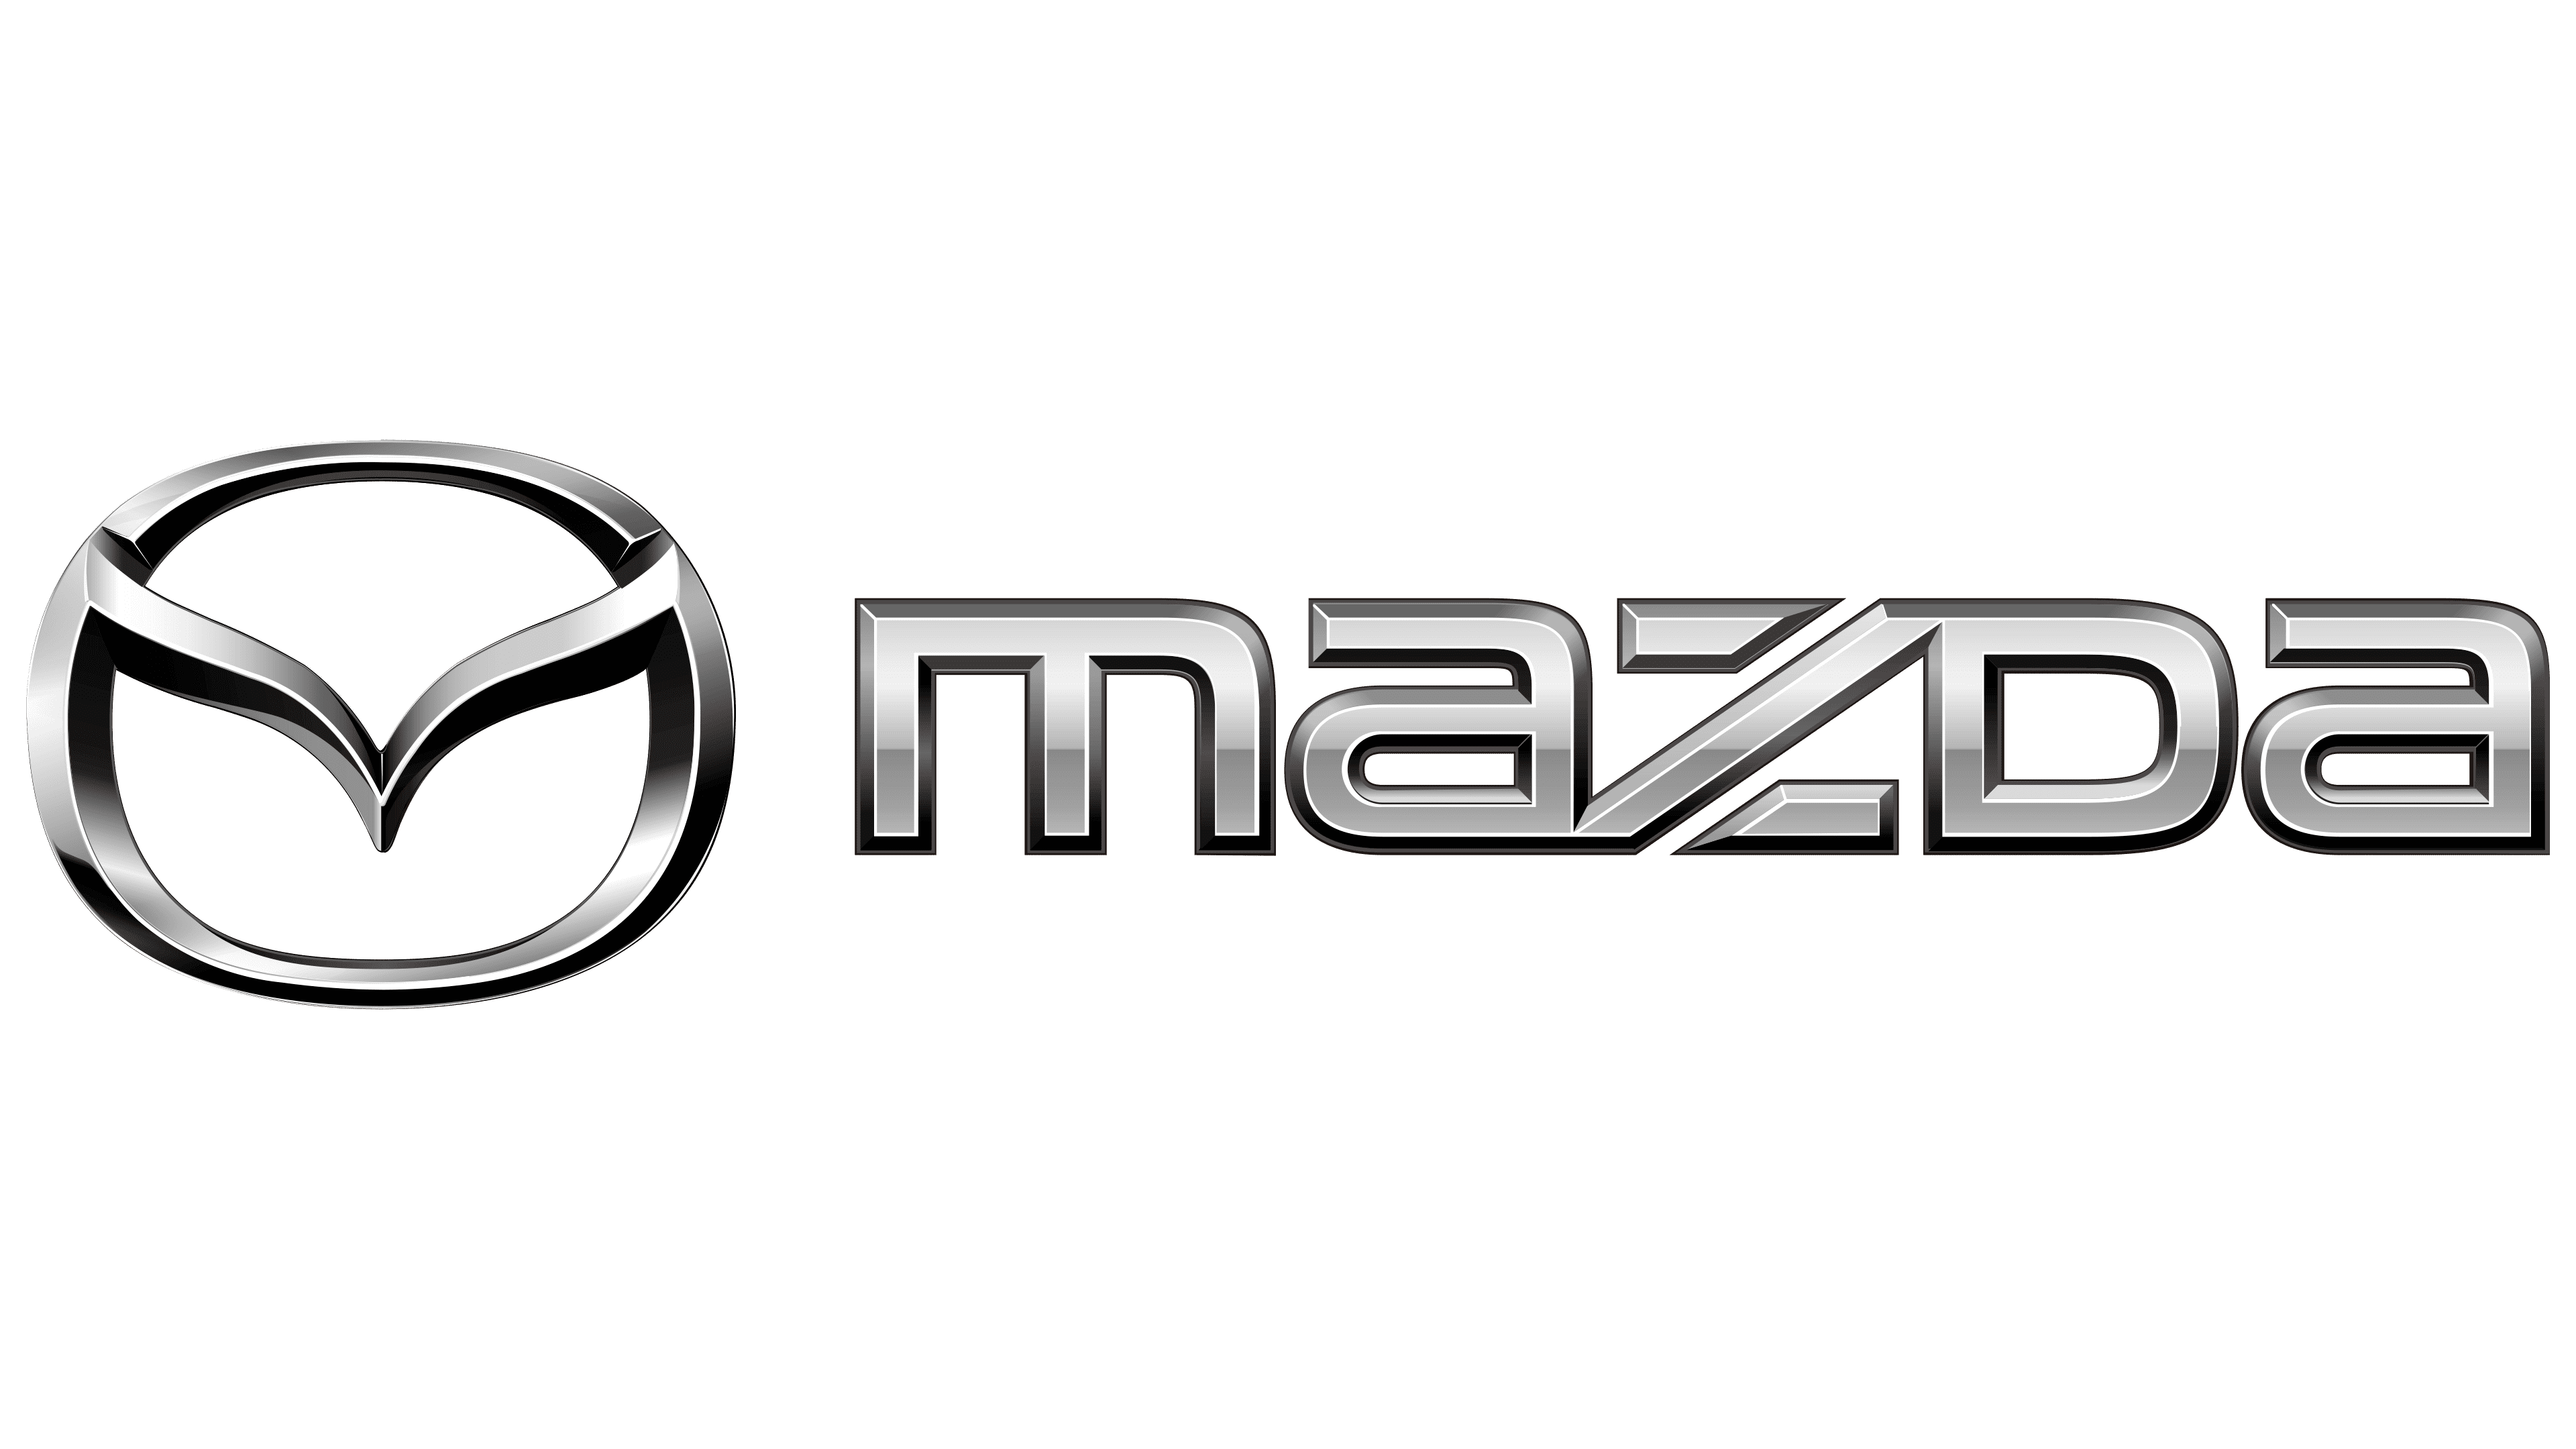 Mazda Logo Mazda Cars Car Brands Logos Car Logos Images